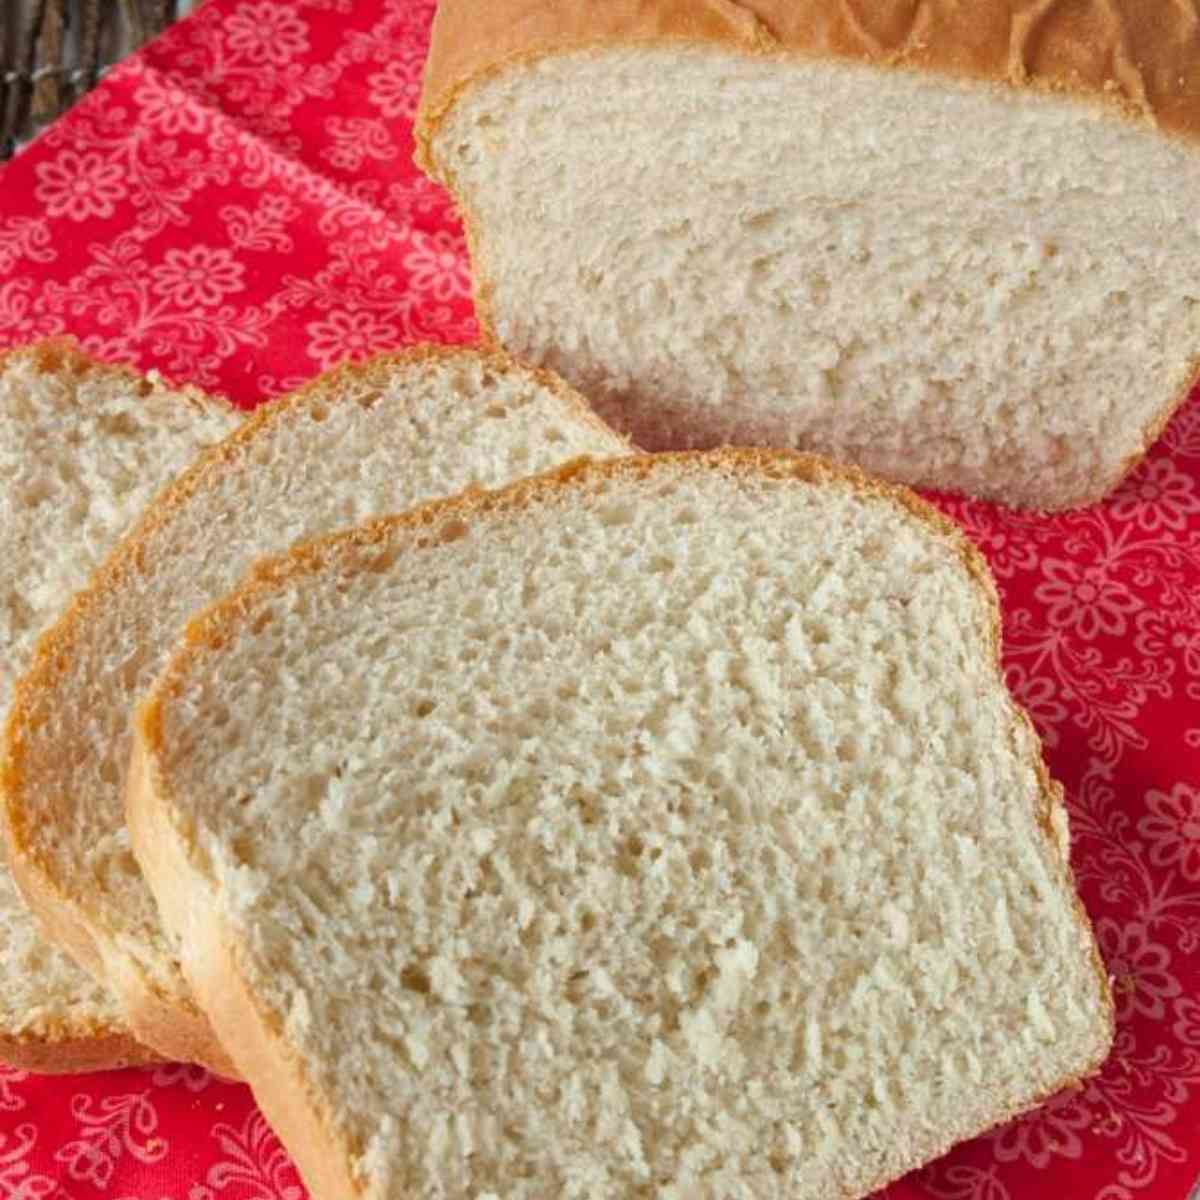 Slices of fresh white bread